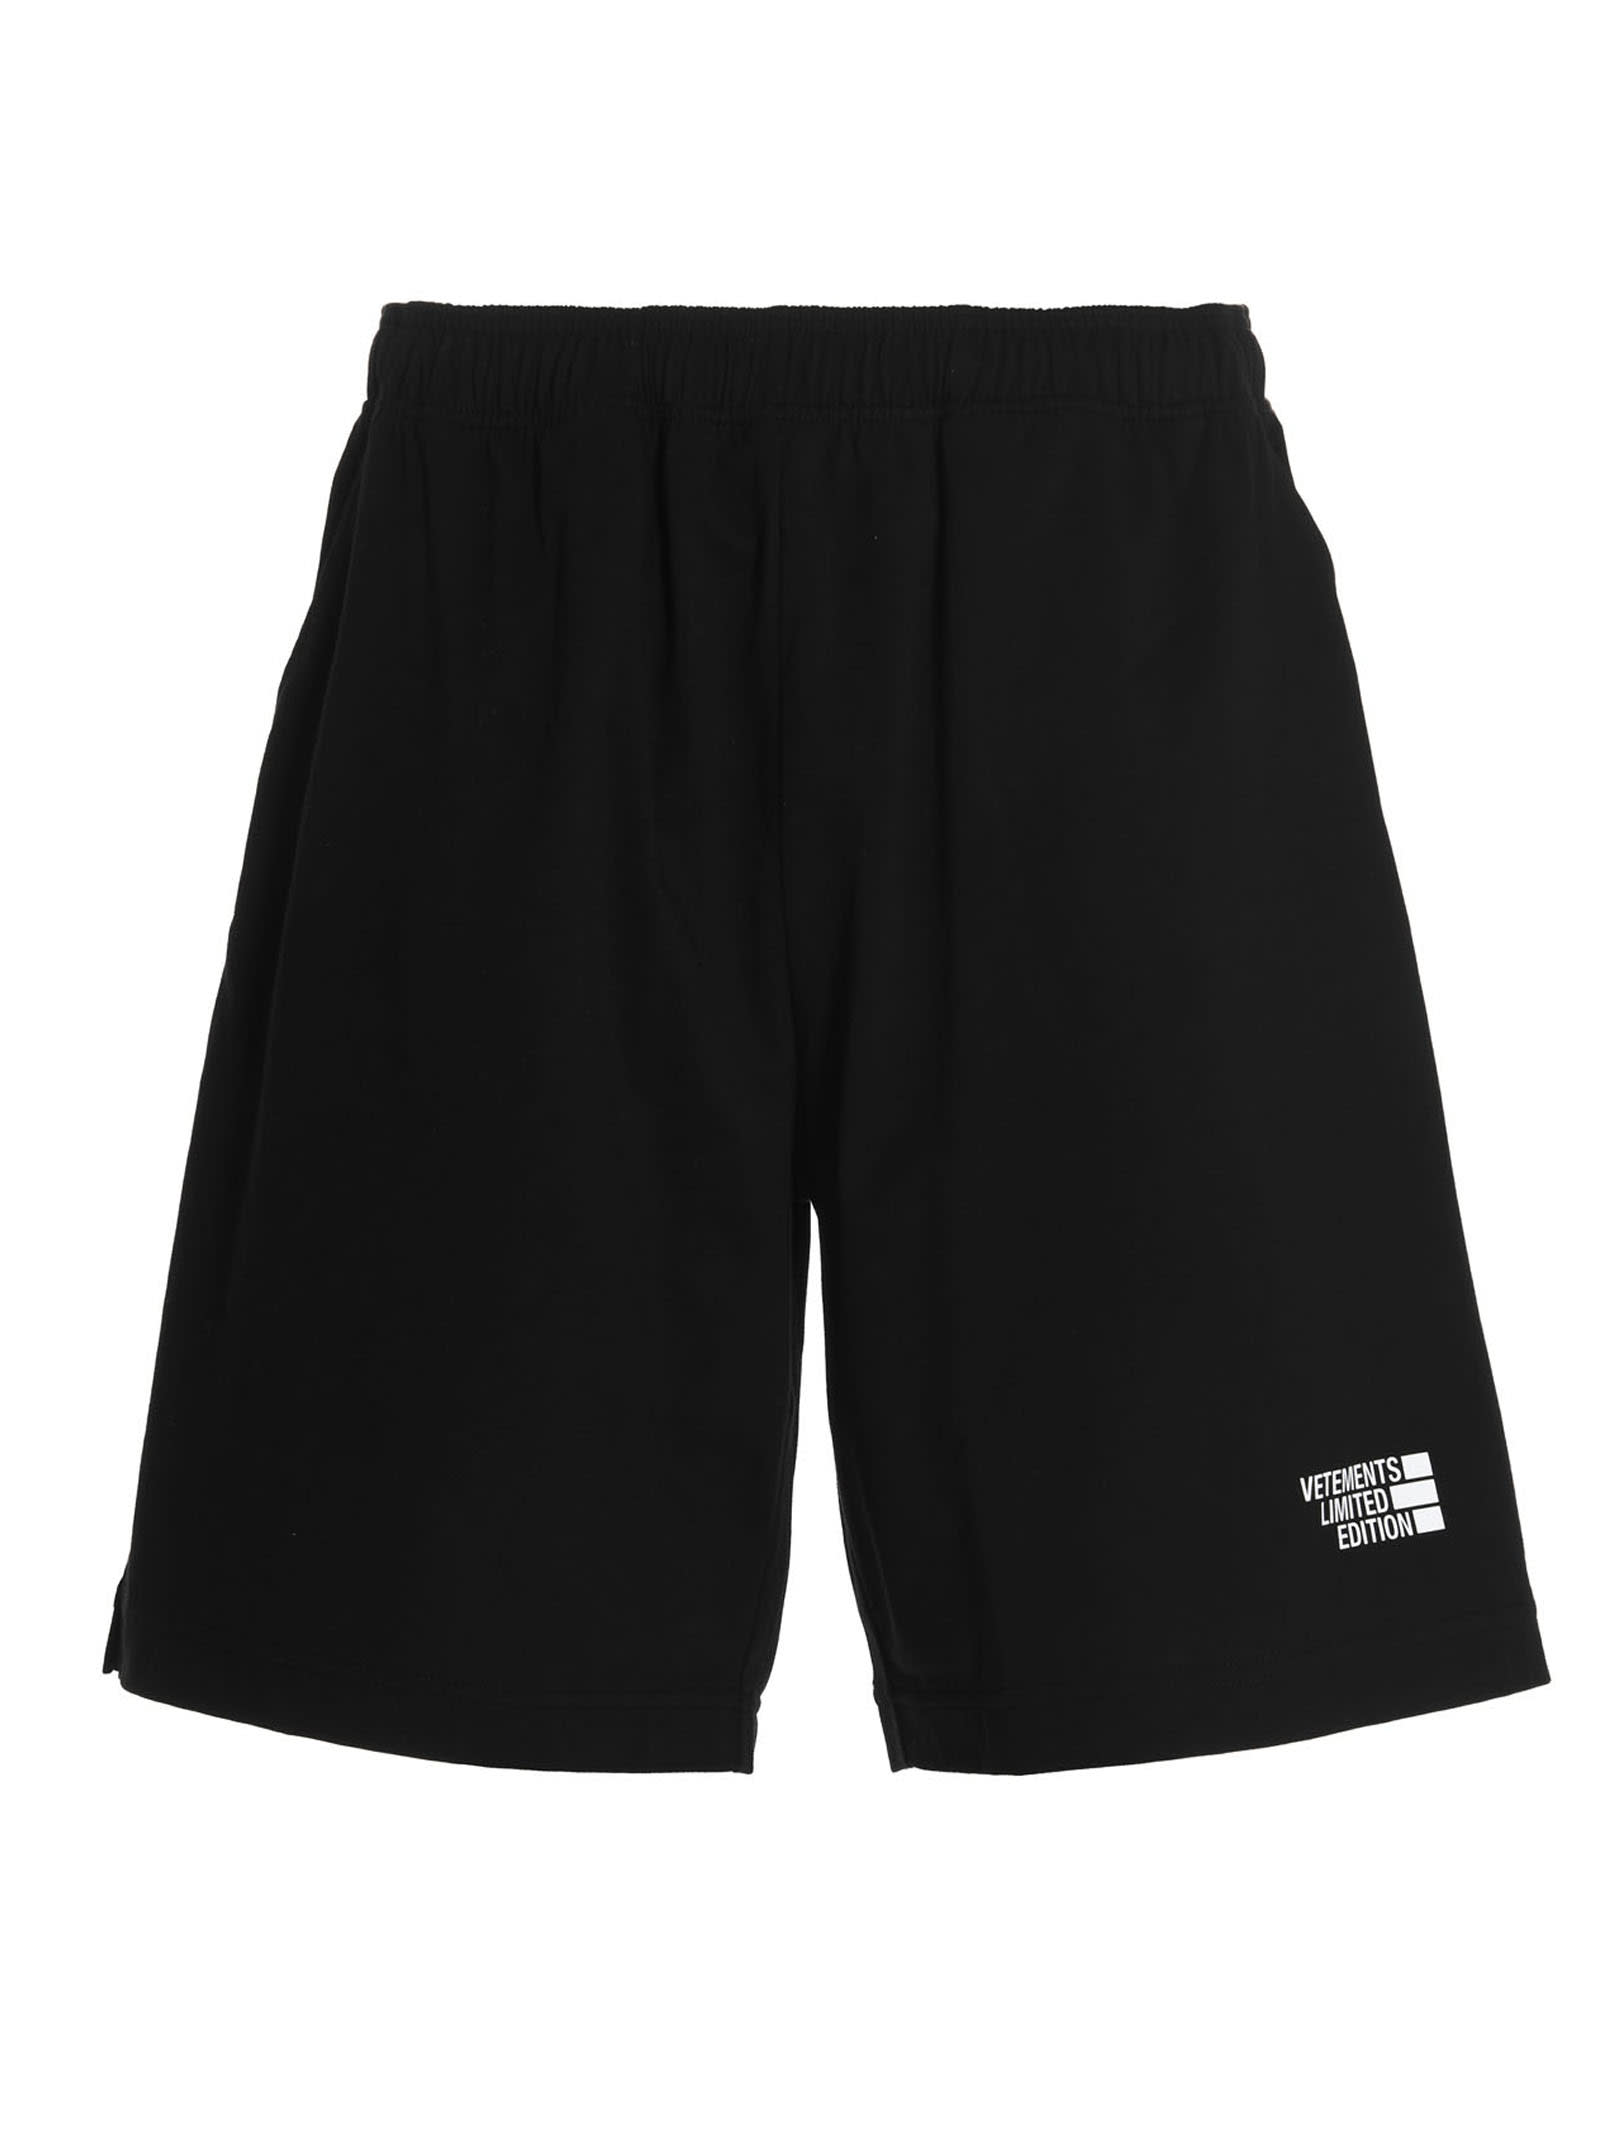 VETEMENTS limited Edition Bermuda Shorts